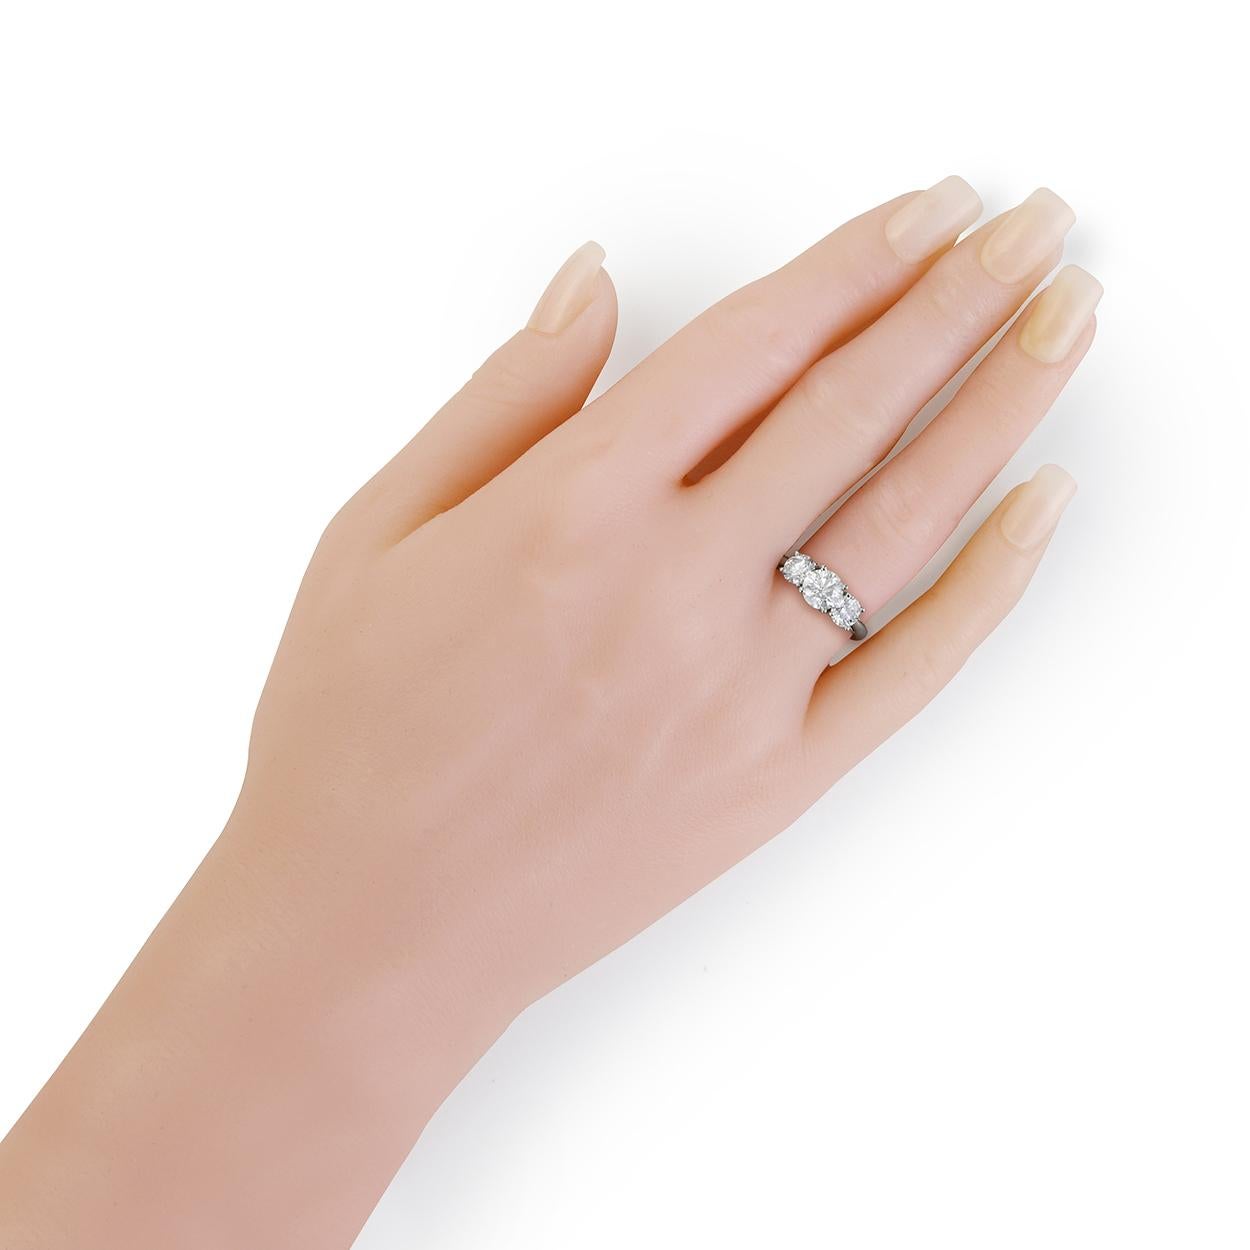 Women's Tiffany & Co 3-Stone Diamond Engagement Ring in Platinum GVS 2.24 Cttw